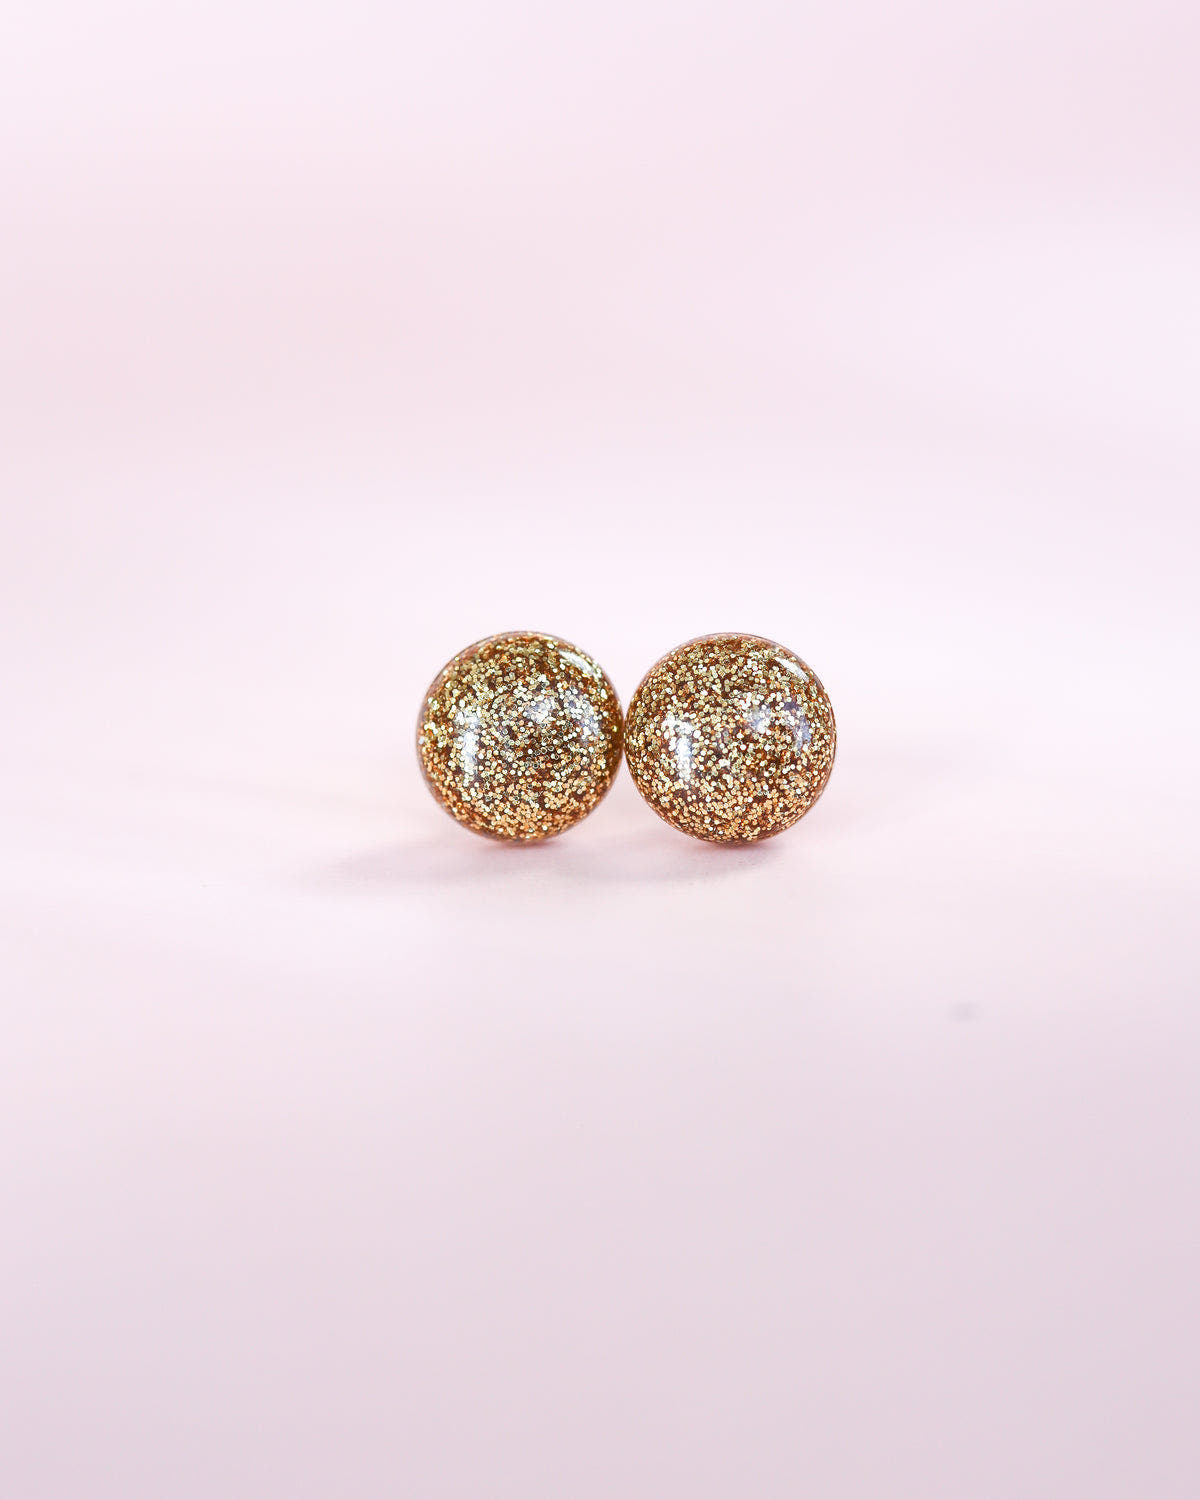 Golden sparkling studs earrings with surgical hypoallergenic steel posts Ollijewelry